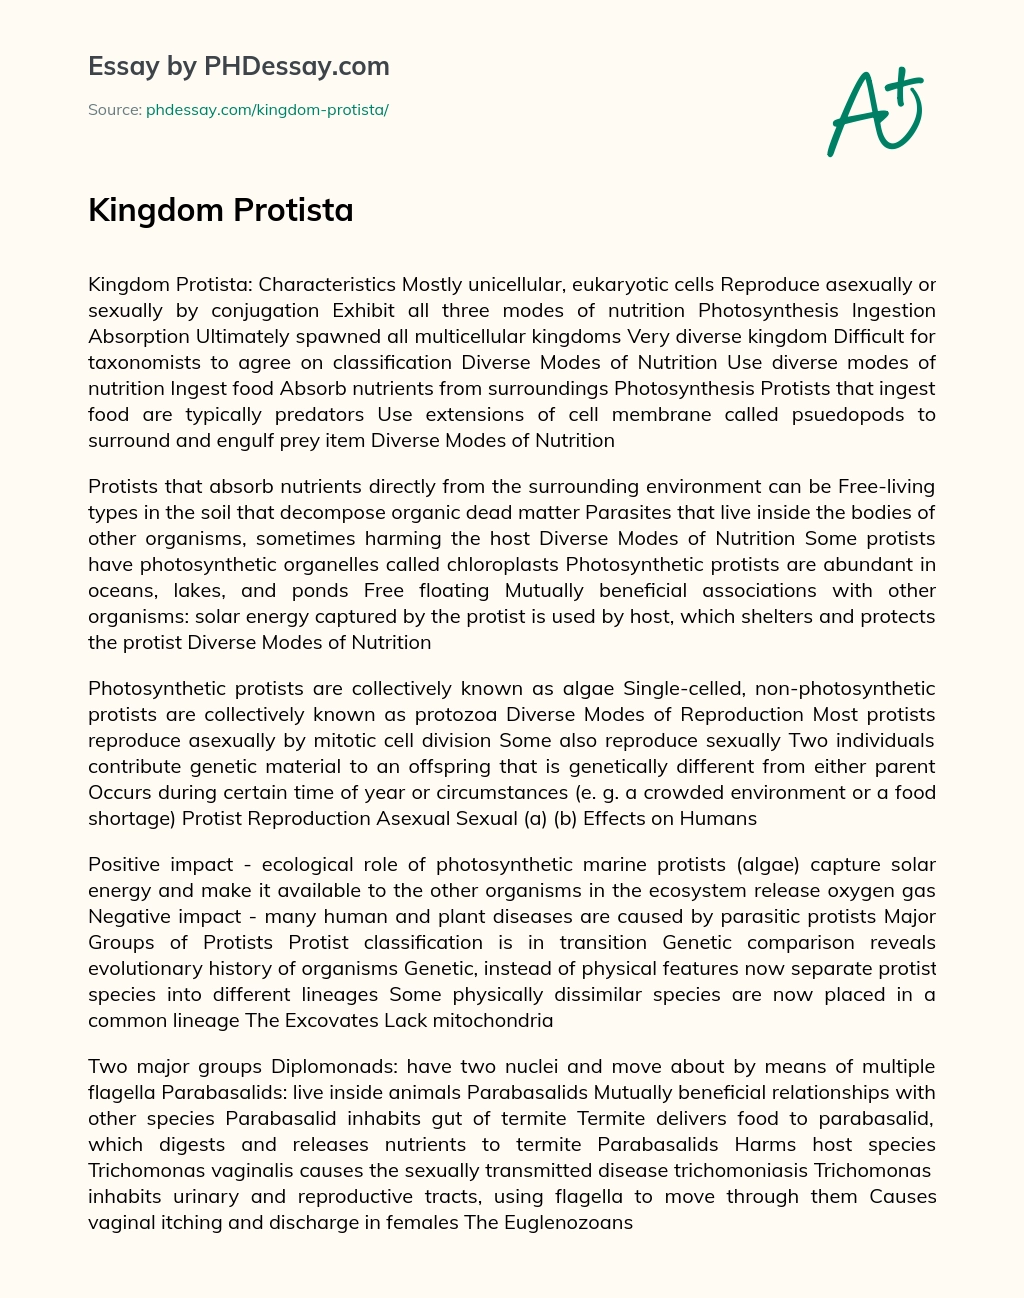 Kingdom Protista essay